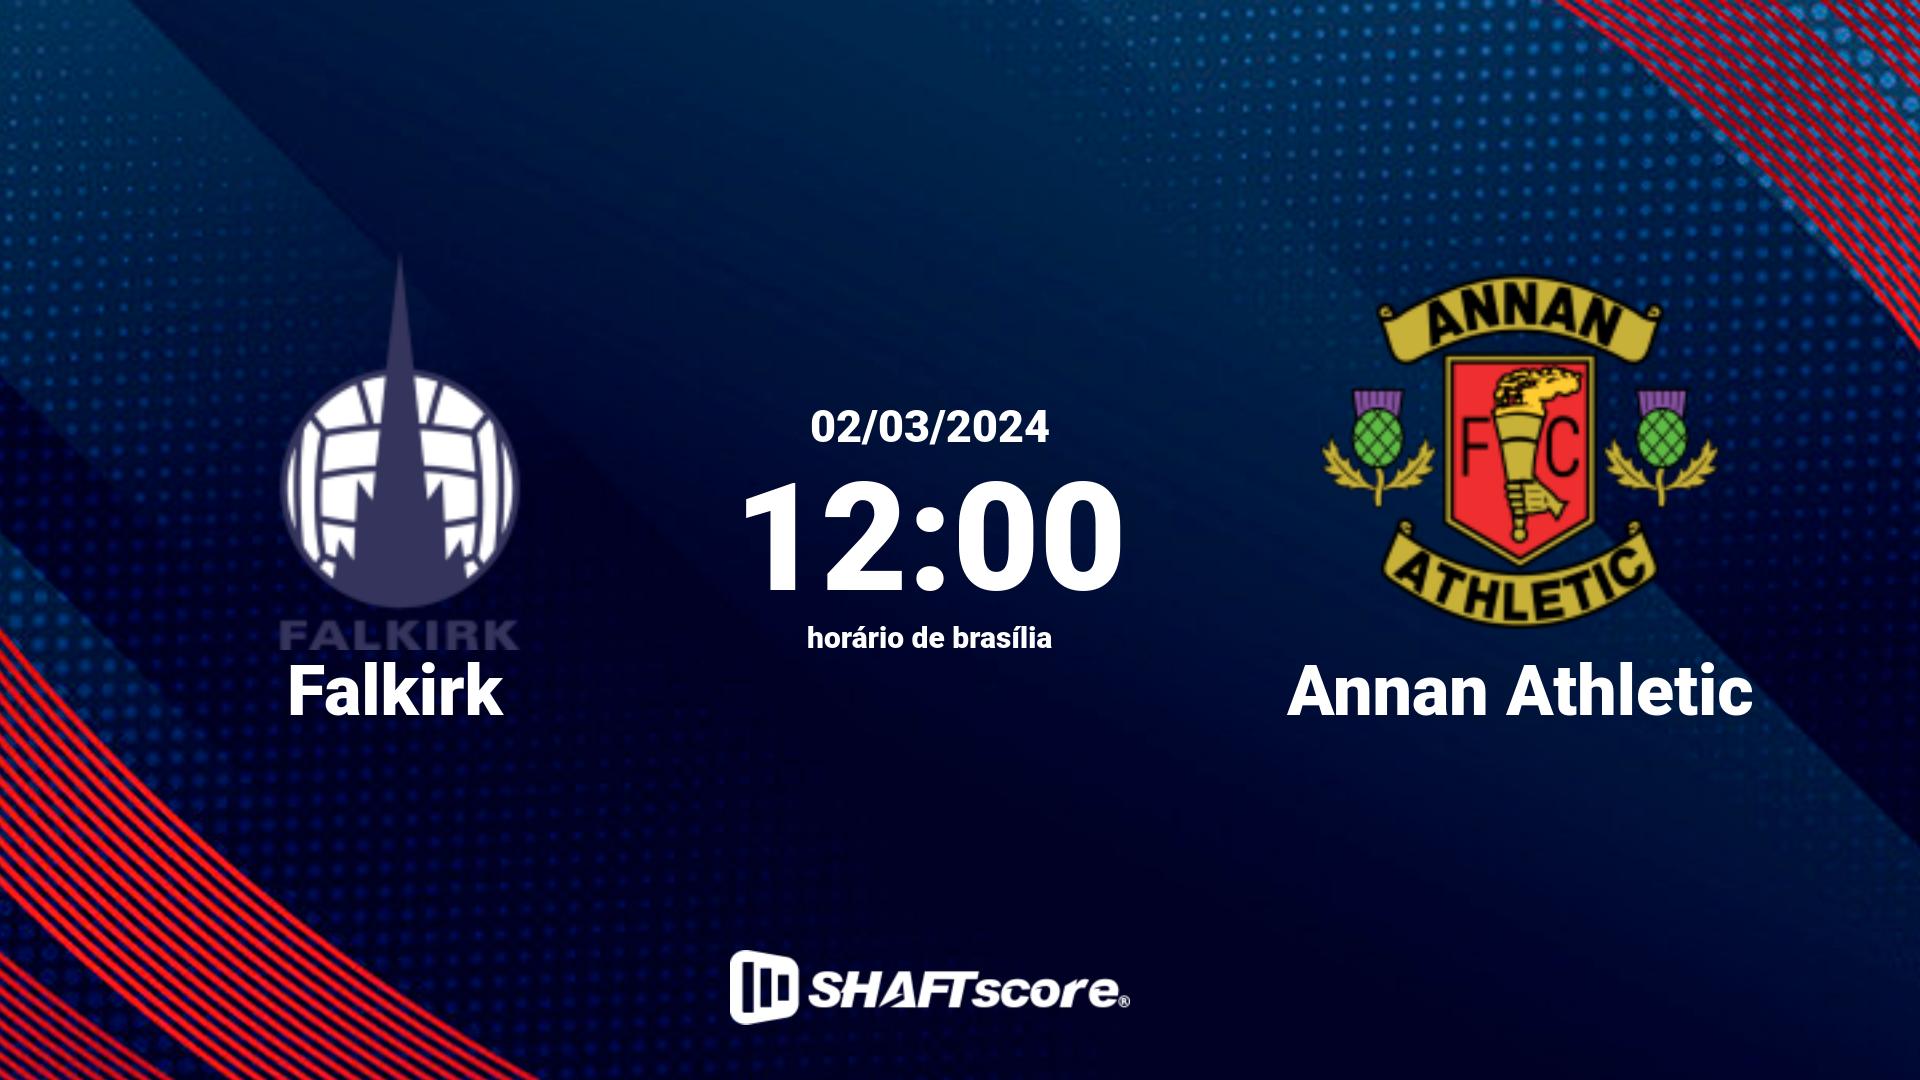 Estatísticas do jogo Falkirk vs Annan Athletic 02.03 12:00